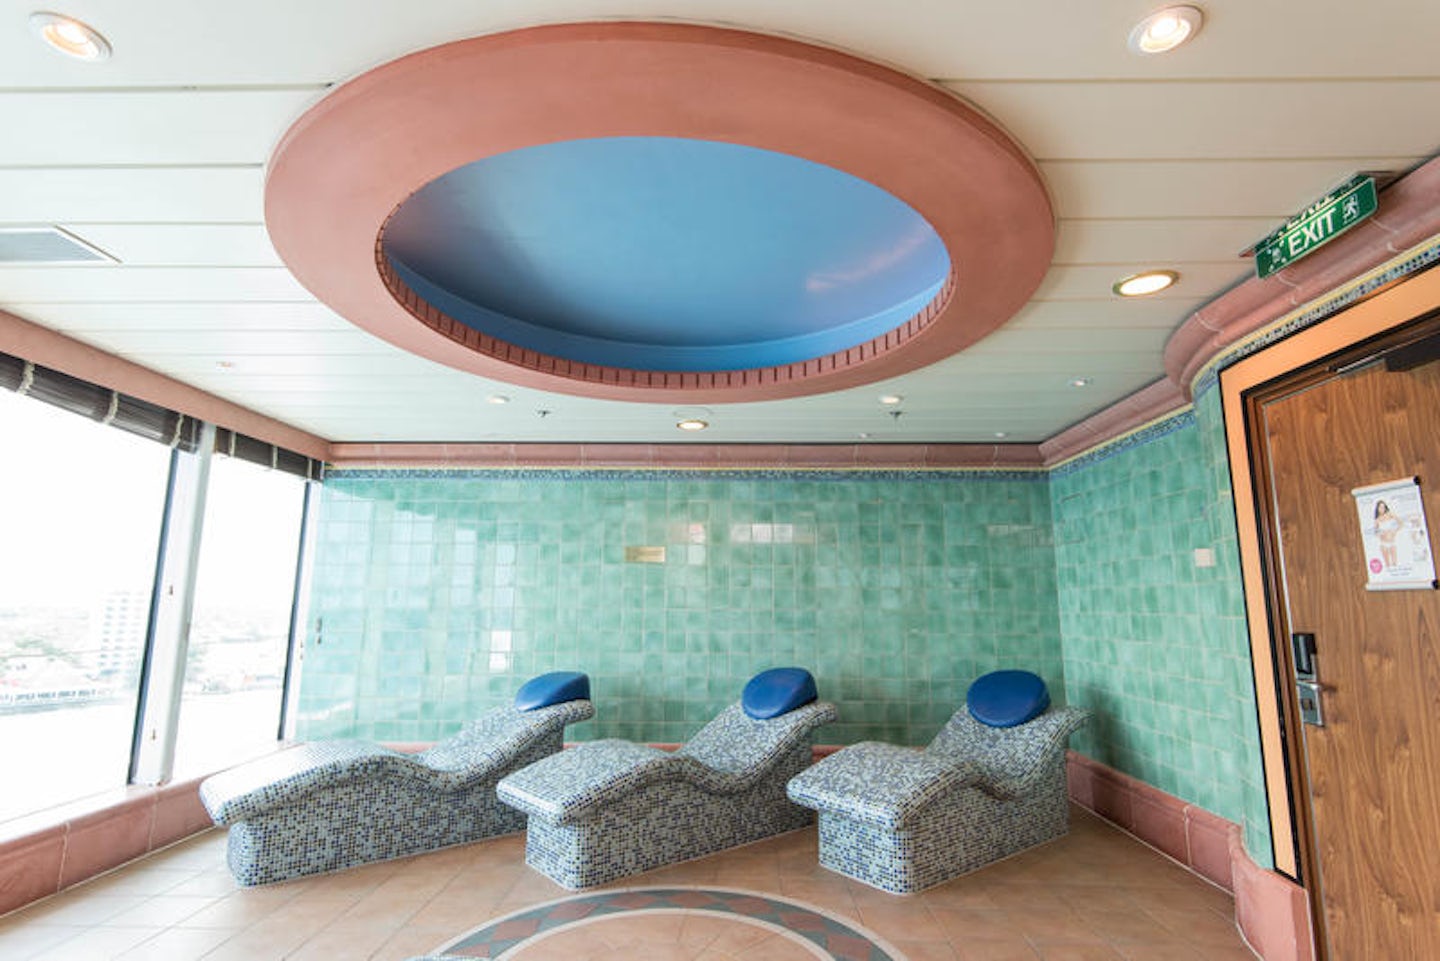 Vitality Spa & Salon on Brilliance of the Seas